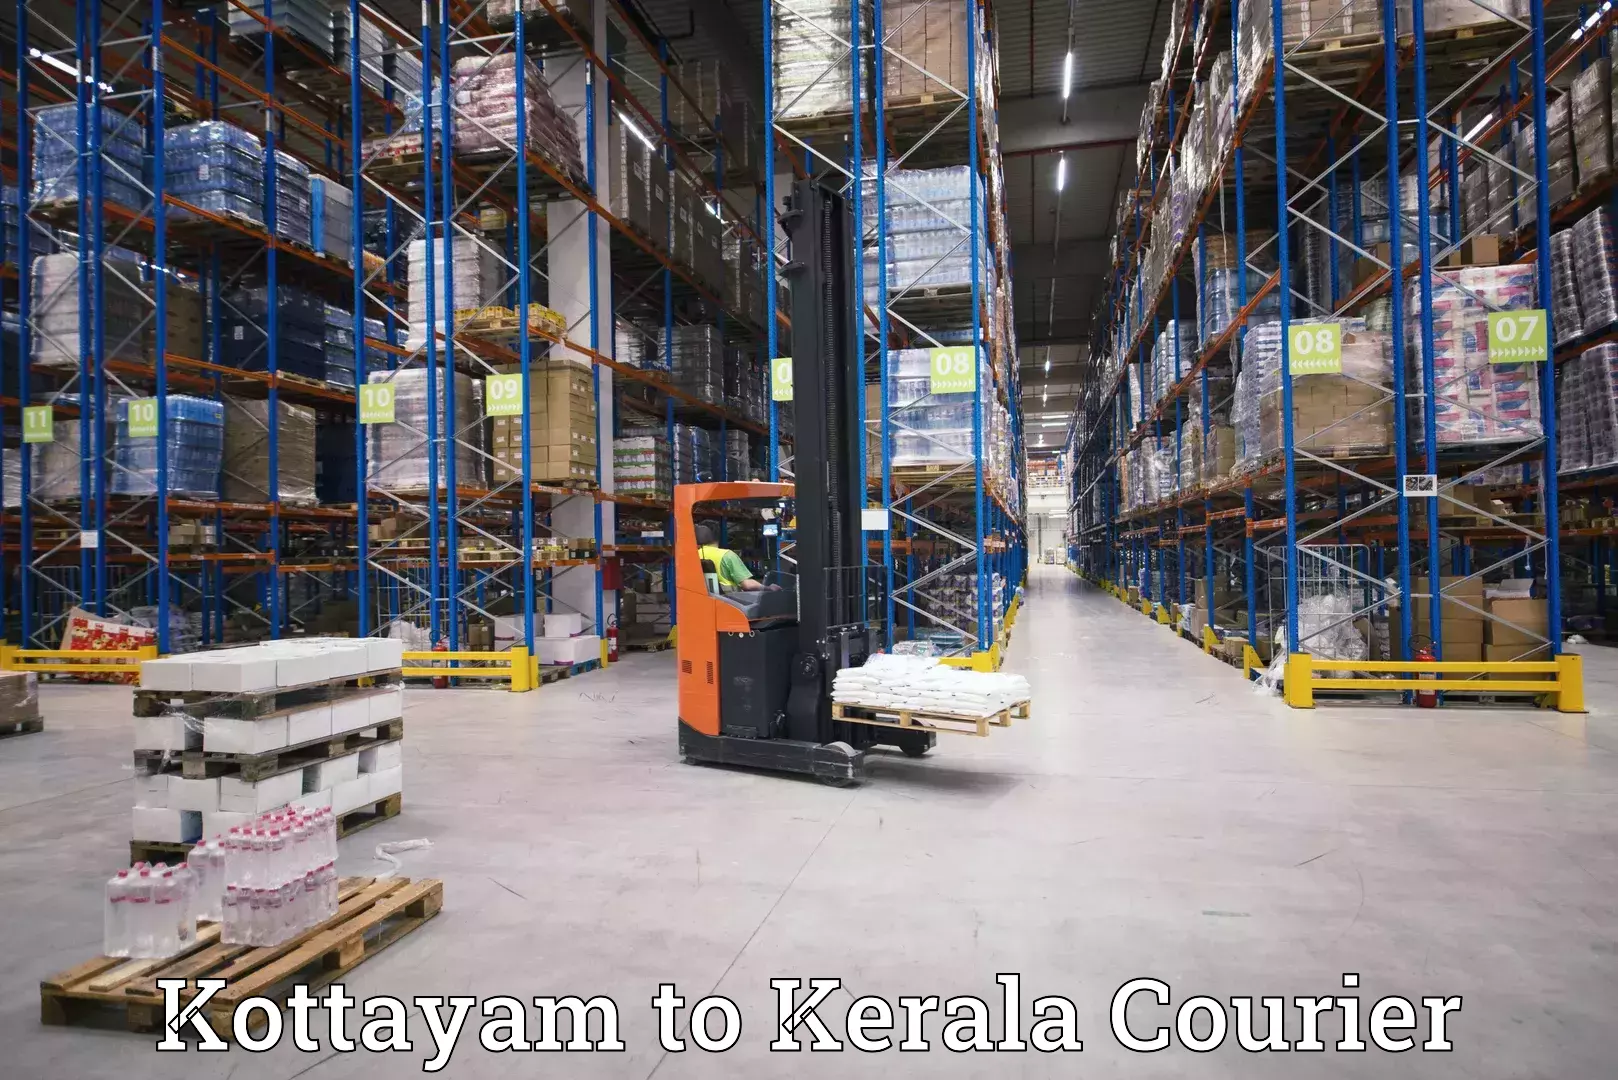 Courier service partnerships Kottayam to Guruvayur